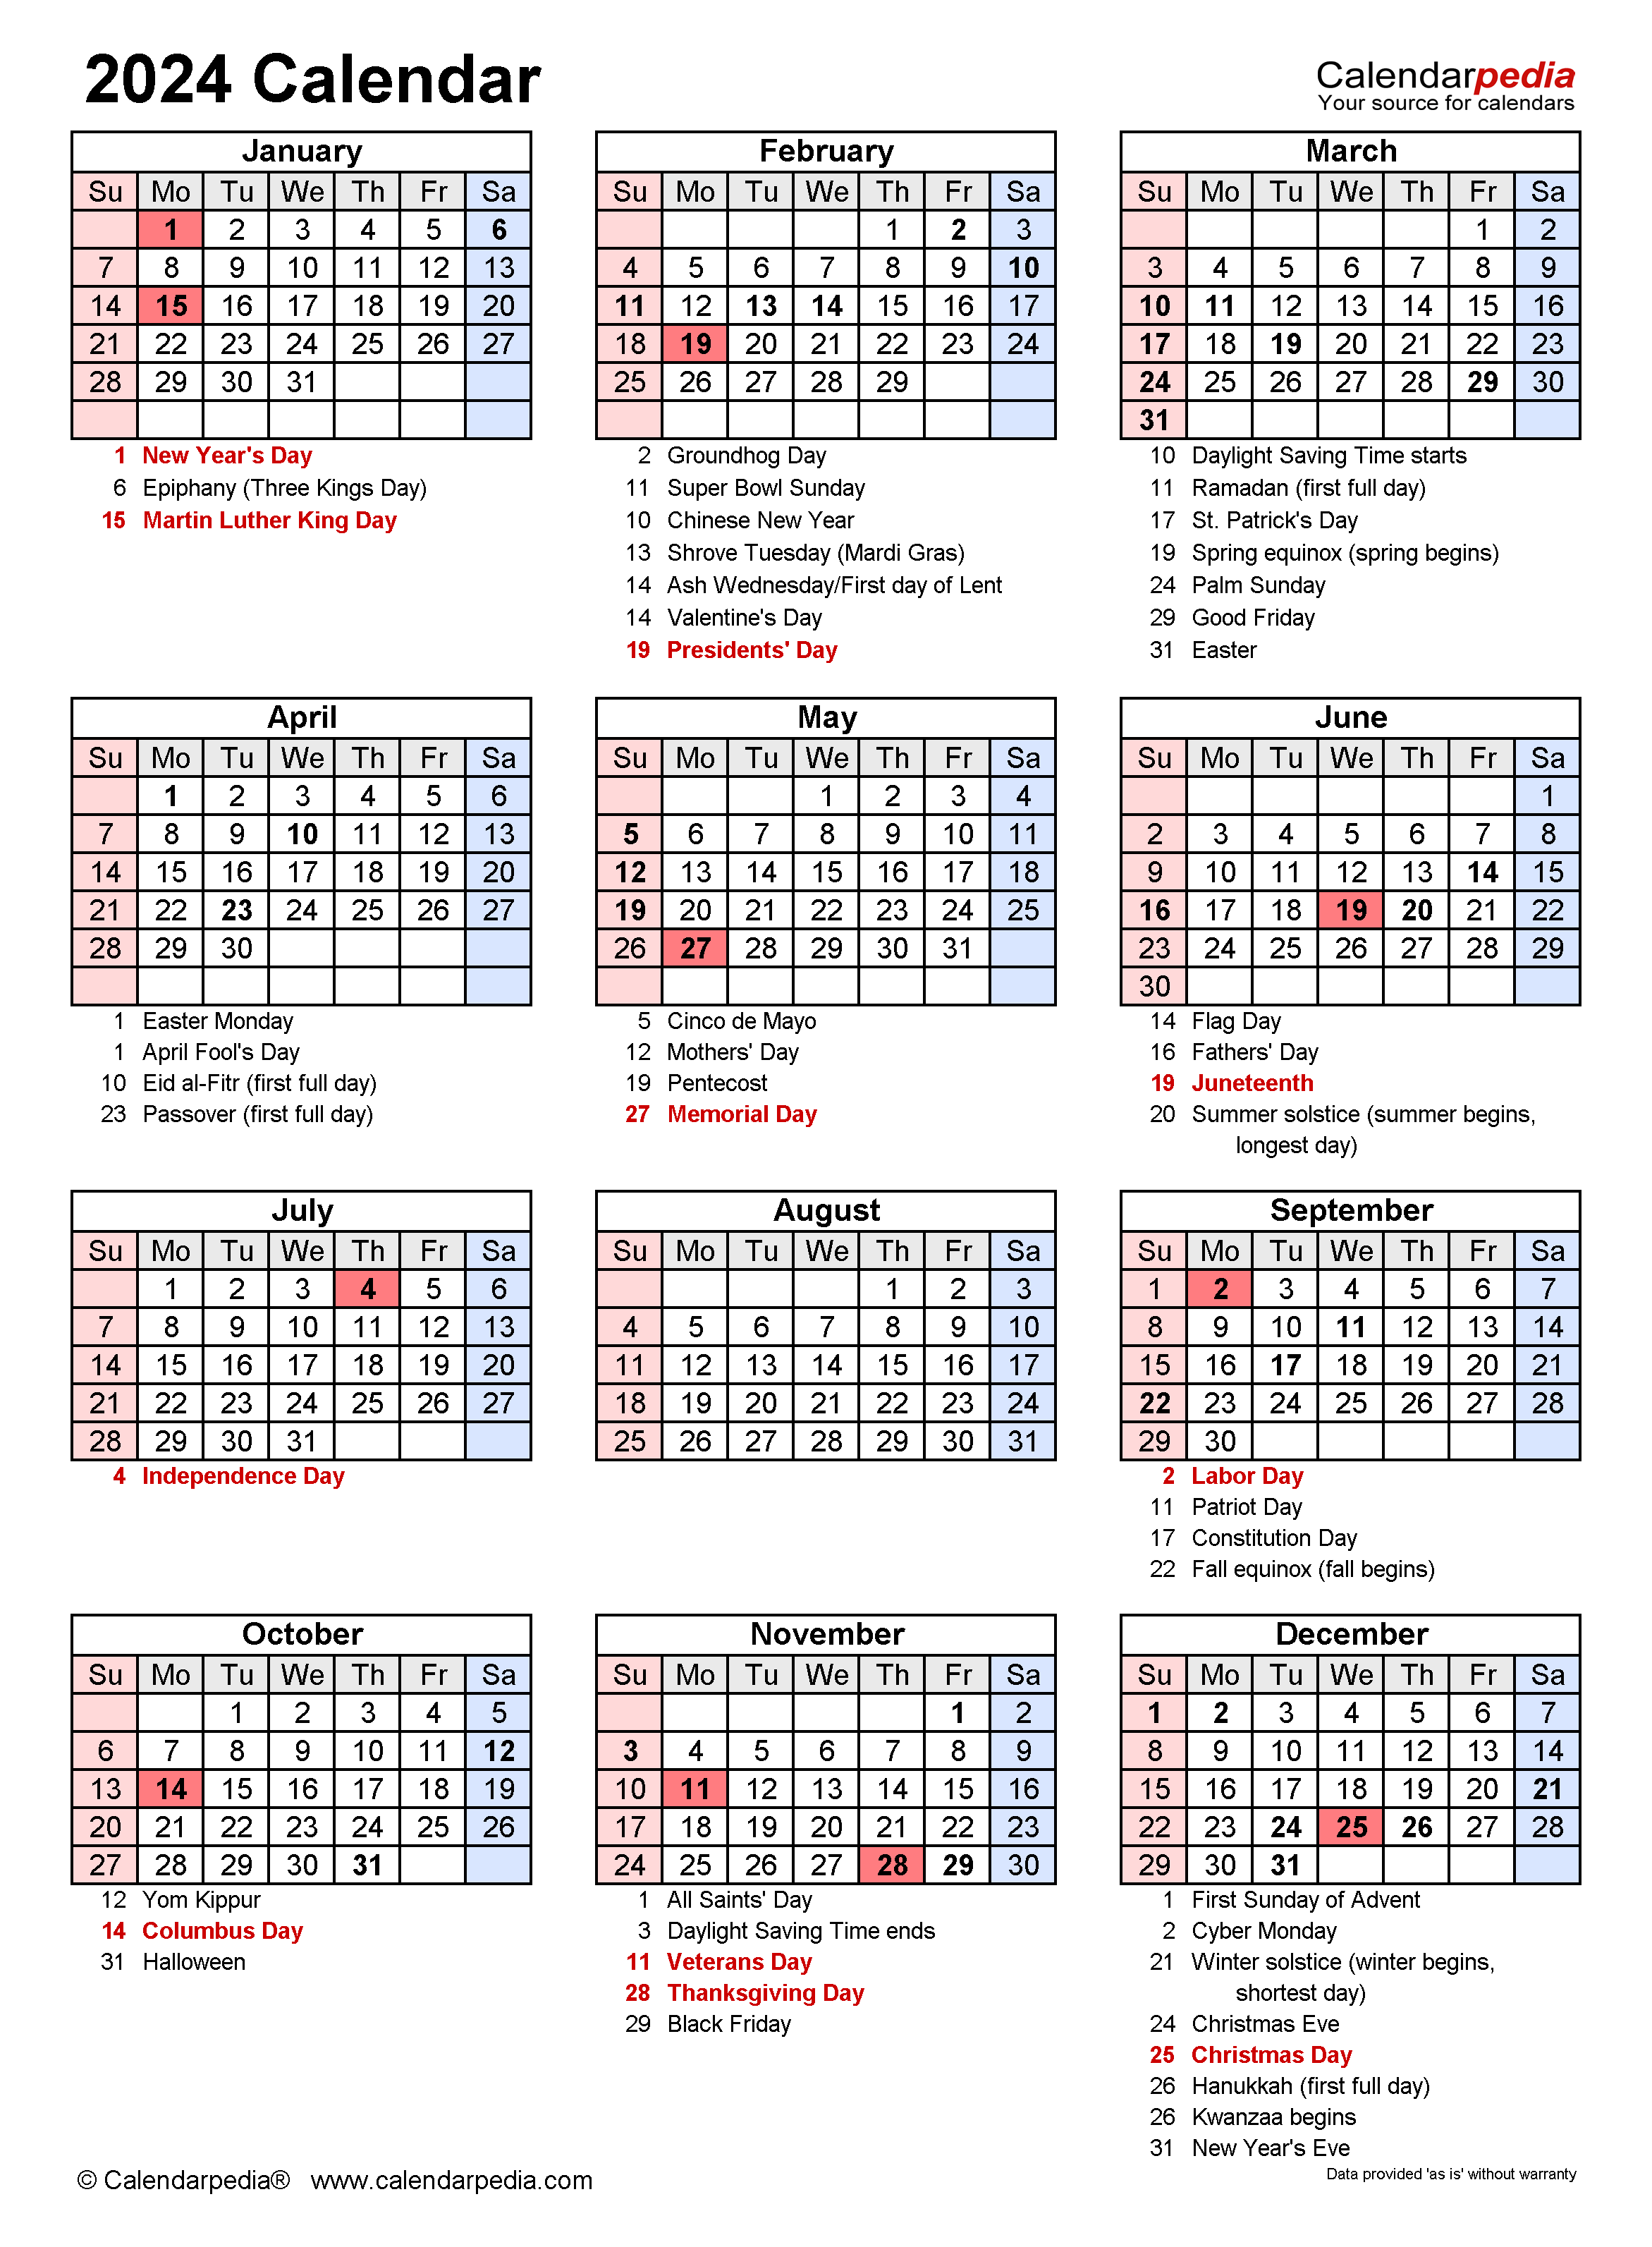 2024 Calendar Free Printable PDF Templates Calendarpedia | Free Printable 2024 Calendar With Holidays One Page